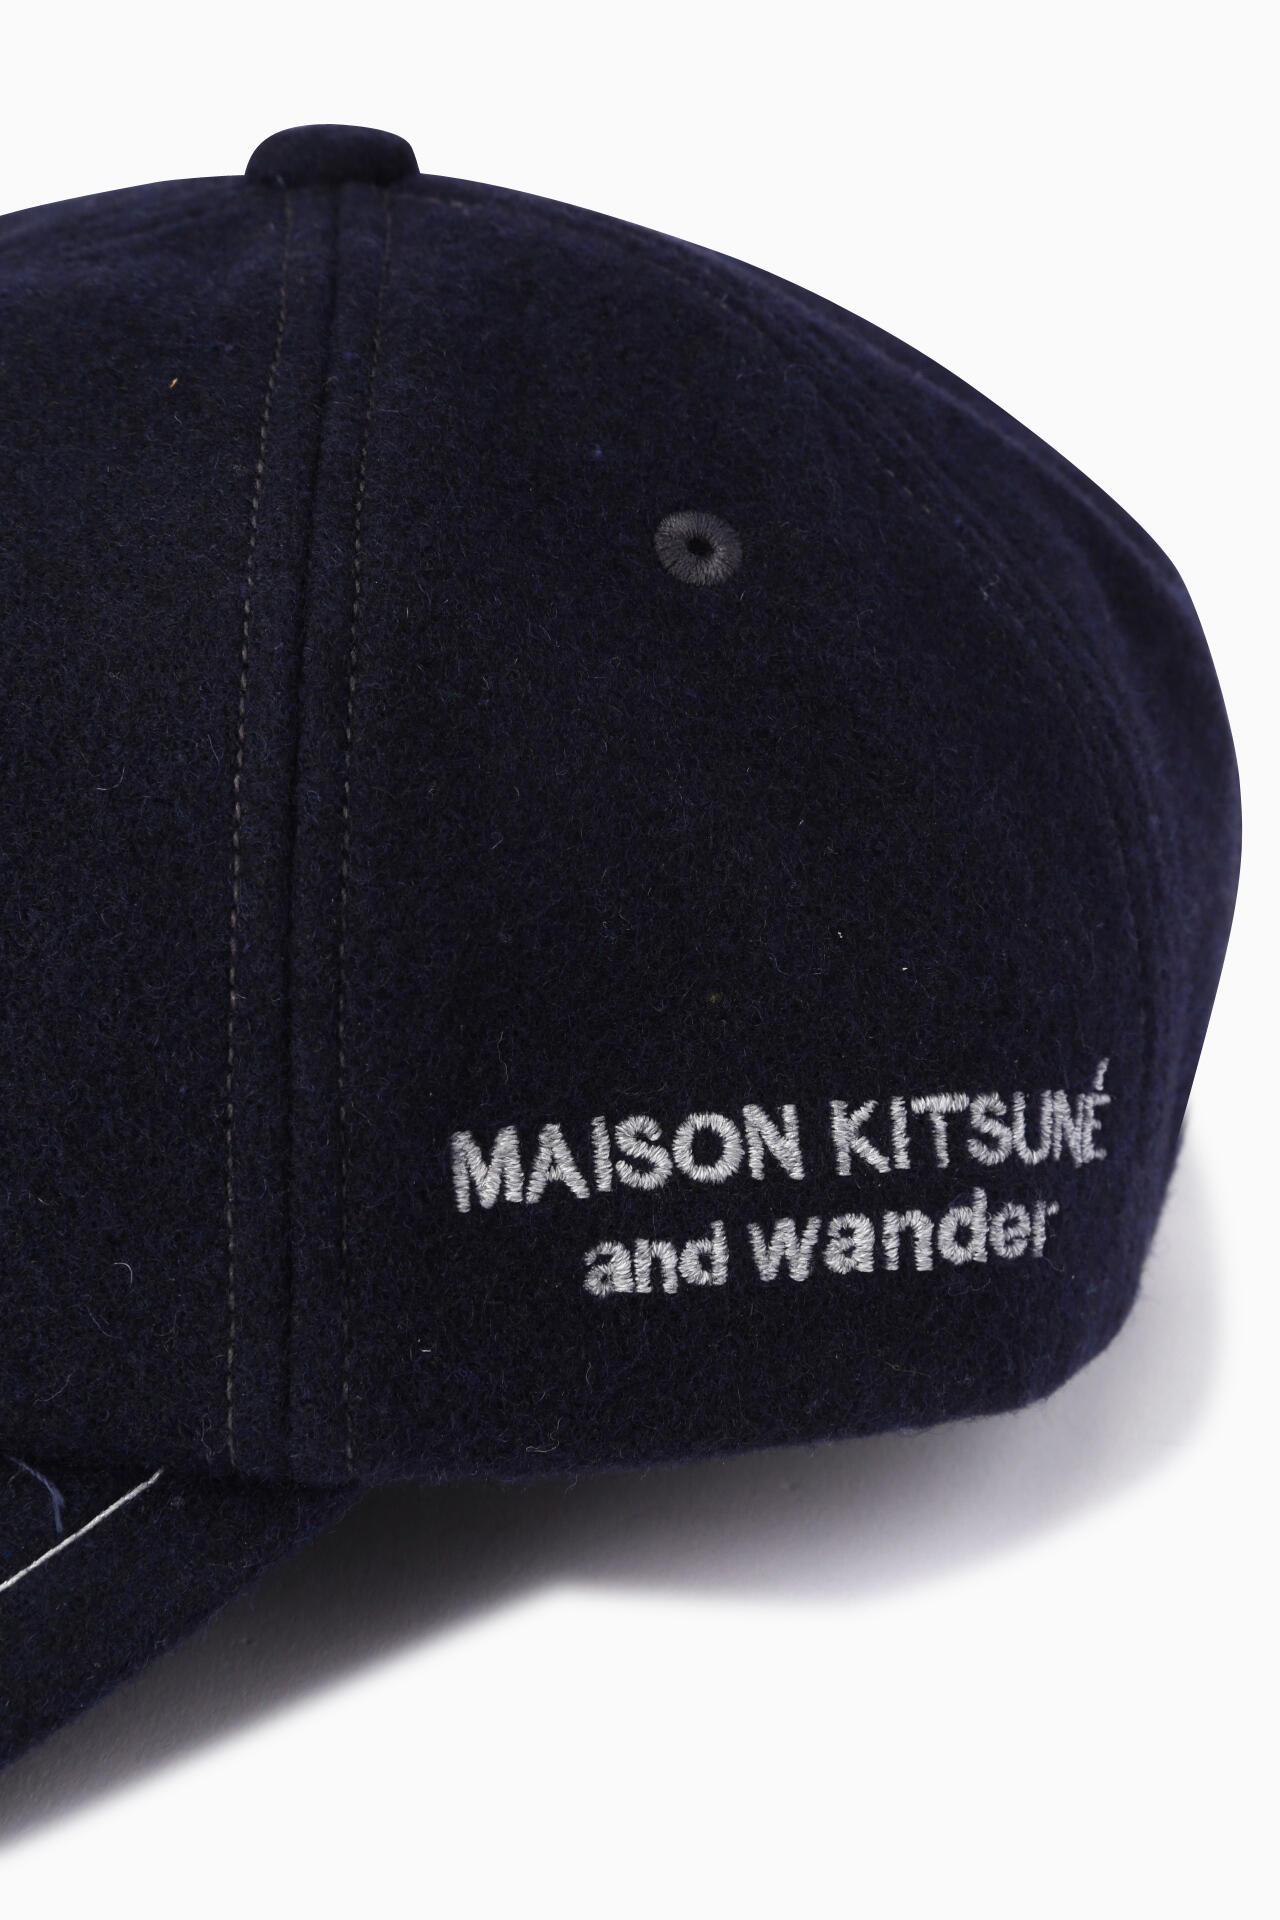 MAISON KITSUNÉ × and wander wool cap